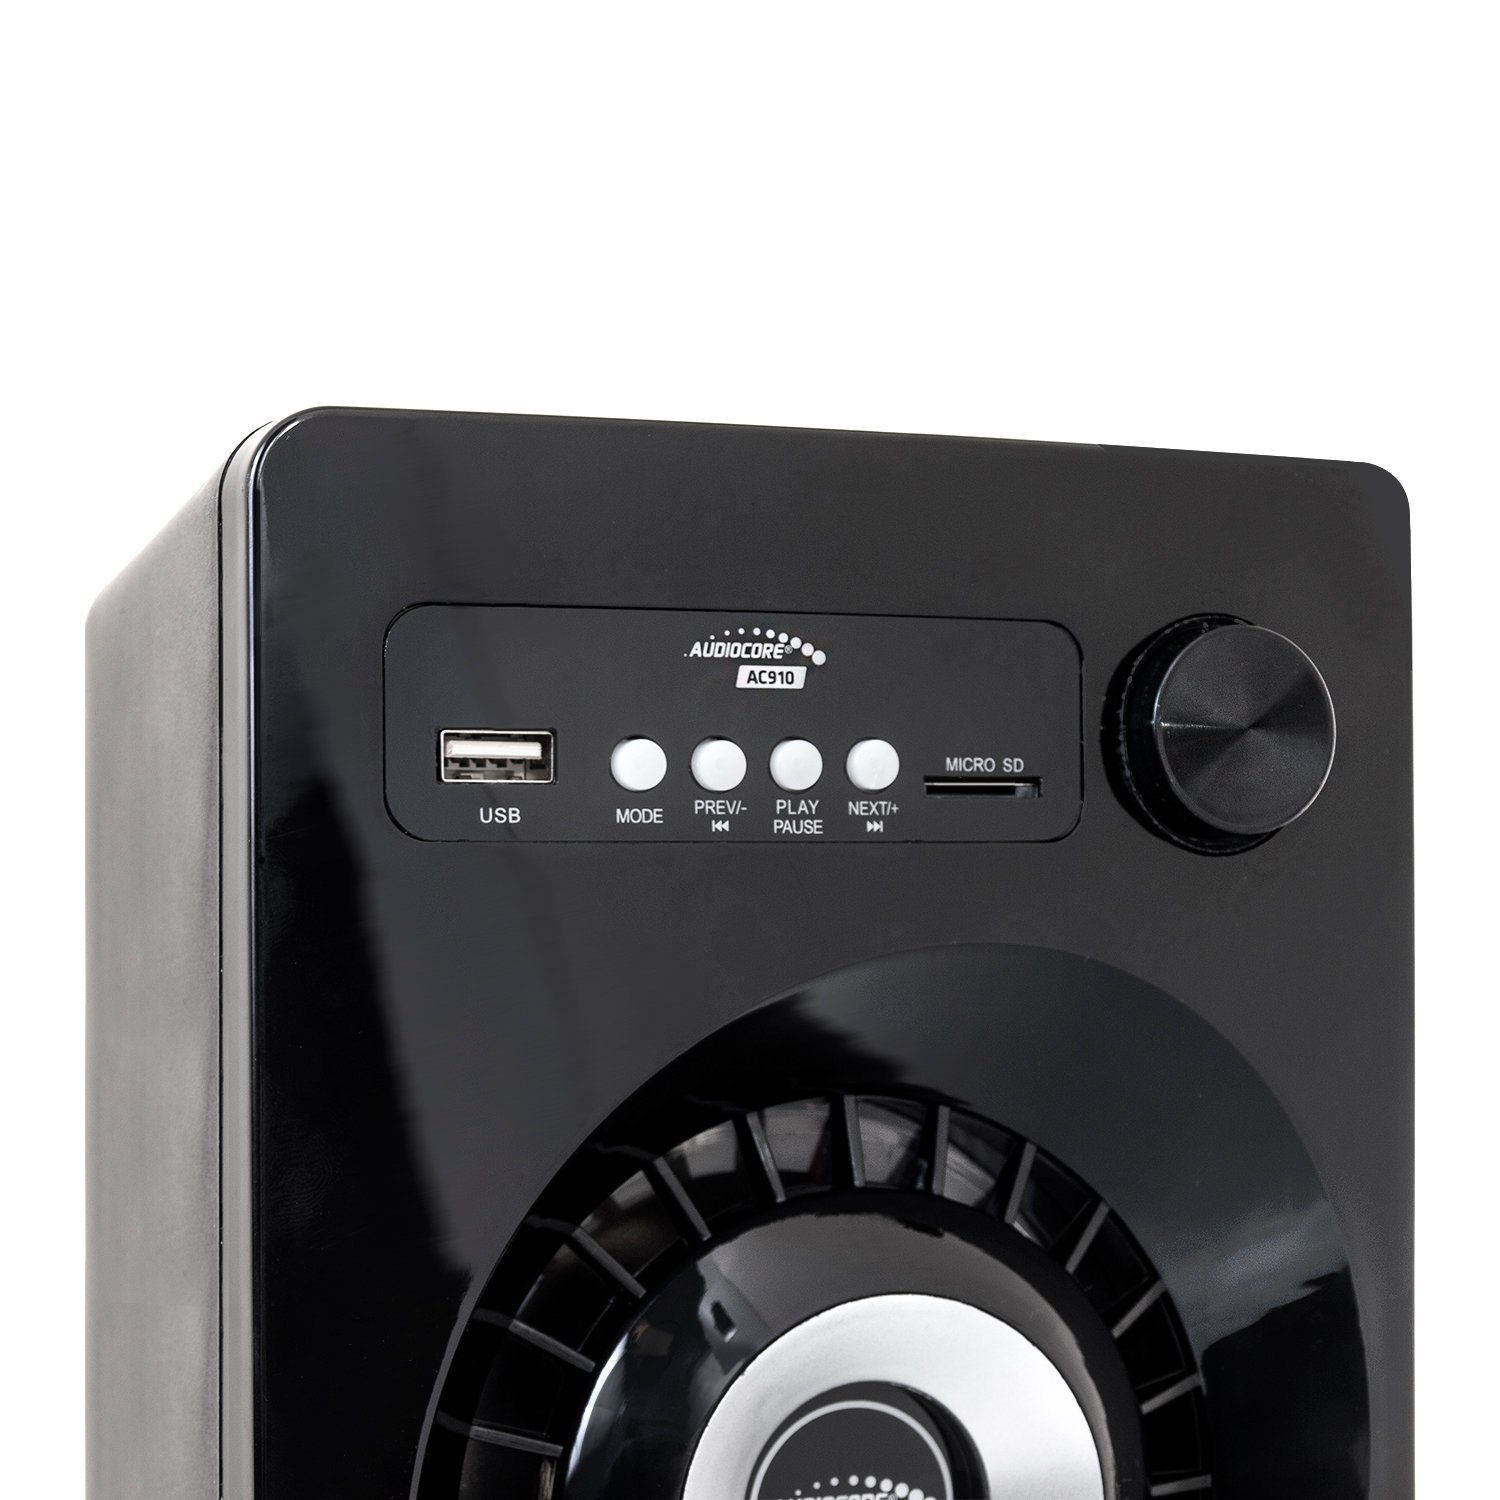 2.1 UKW-Radio, USB, Lautsprechersystem Fernbedienung) (Bluetooth, AC910 W, SD, 55 Audiocore inkl. AUX,